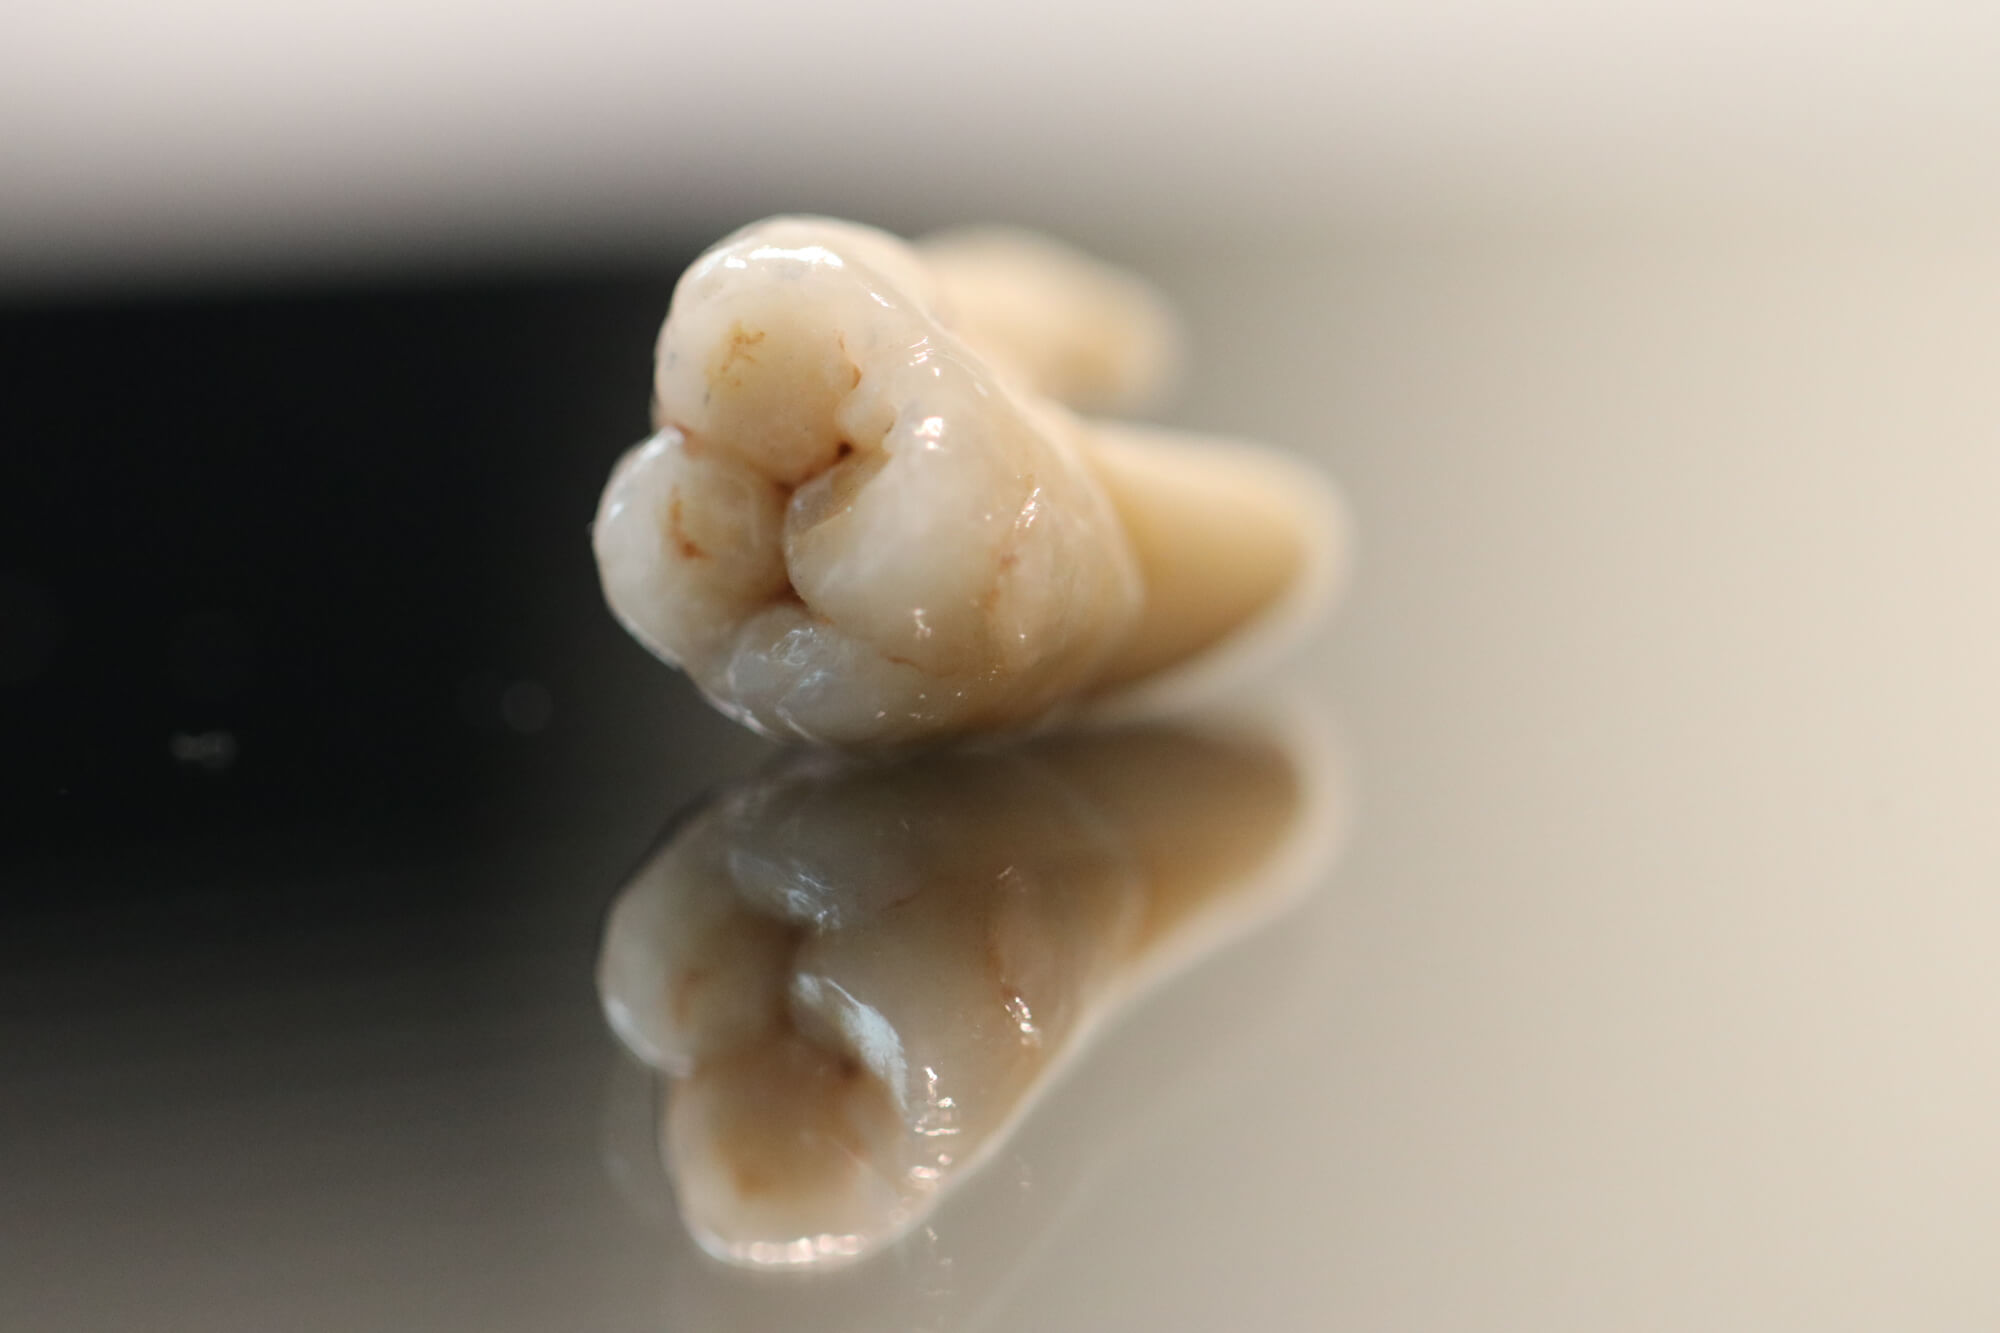 Lockere Zähne retten, sonst droht Zahnverlust